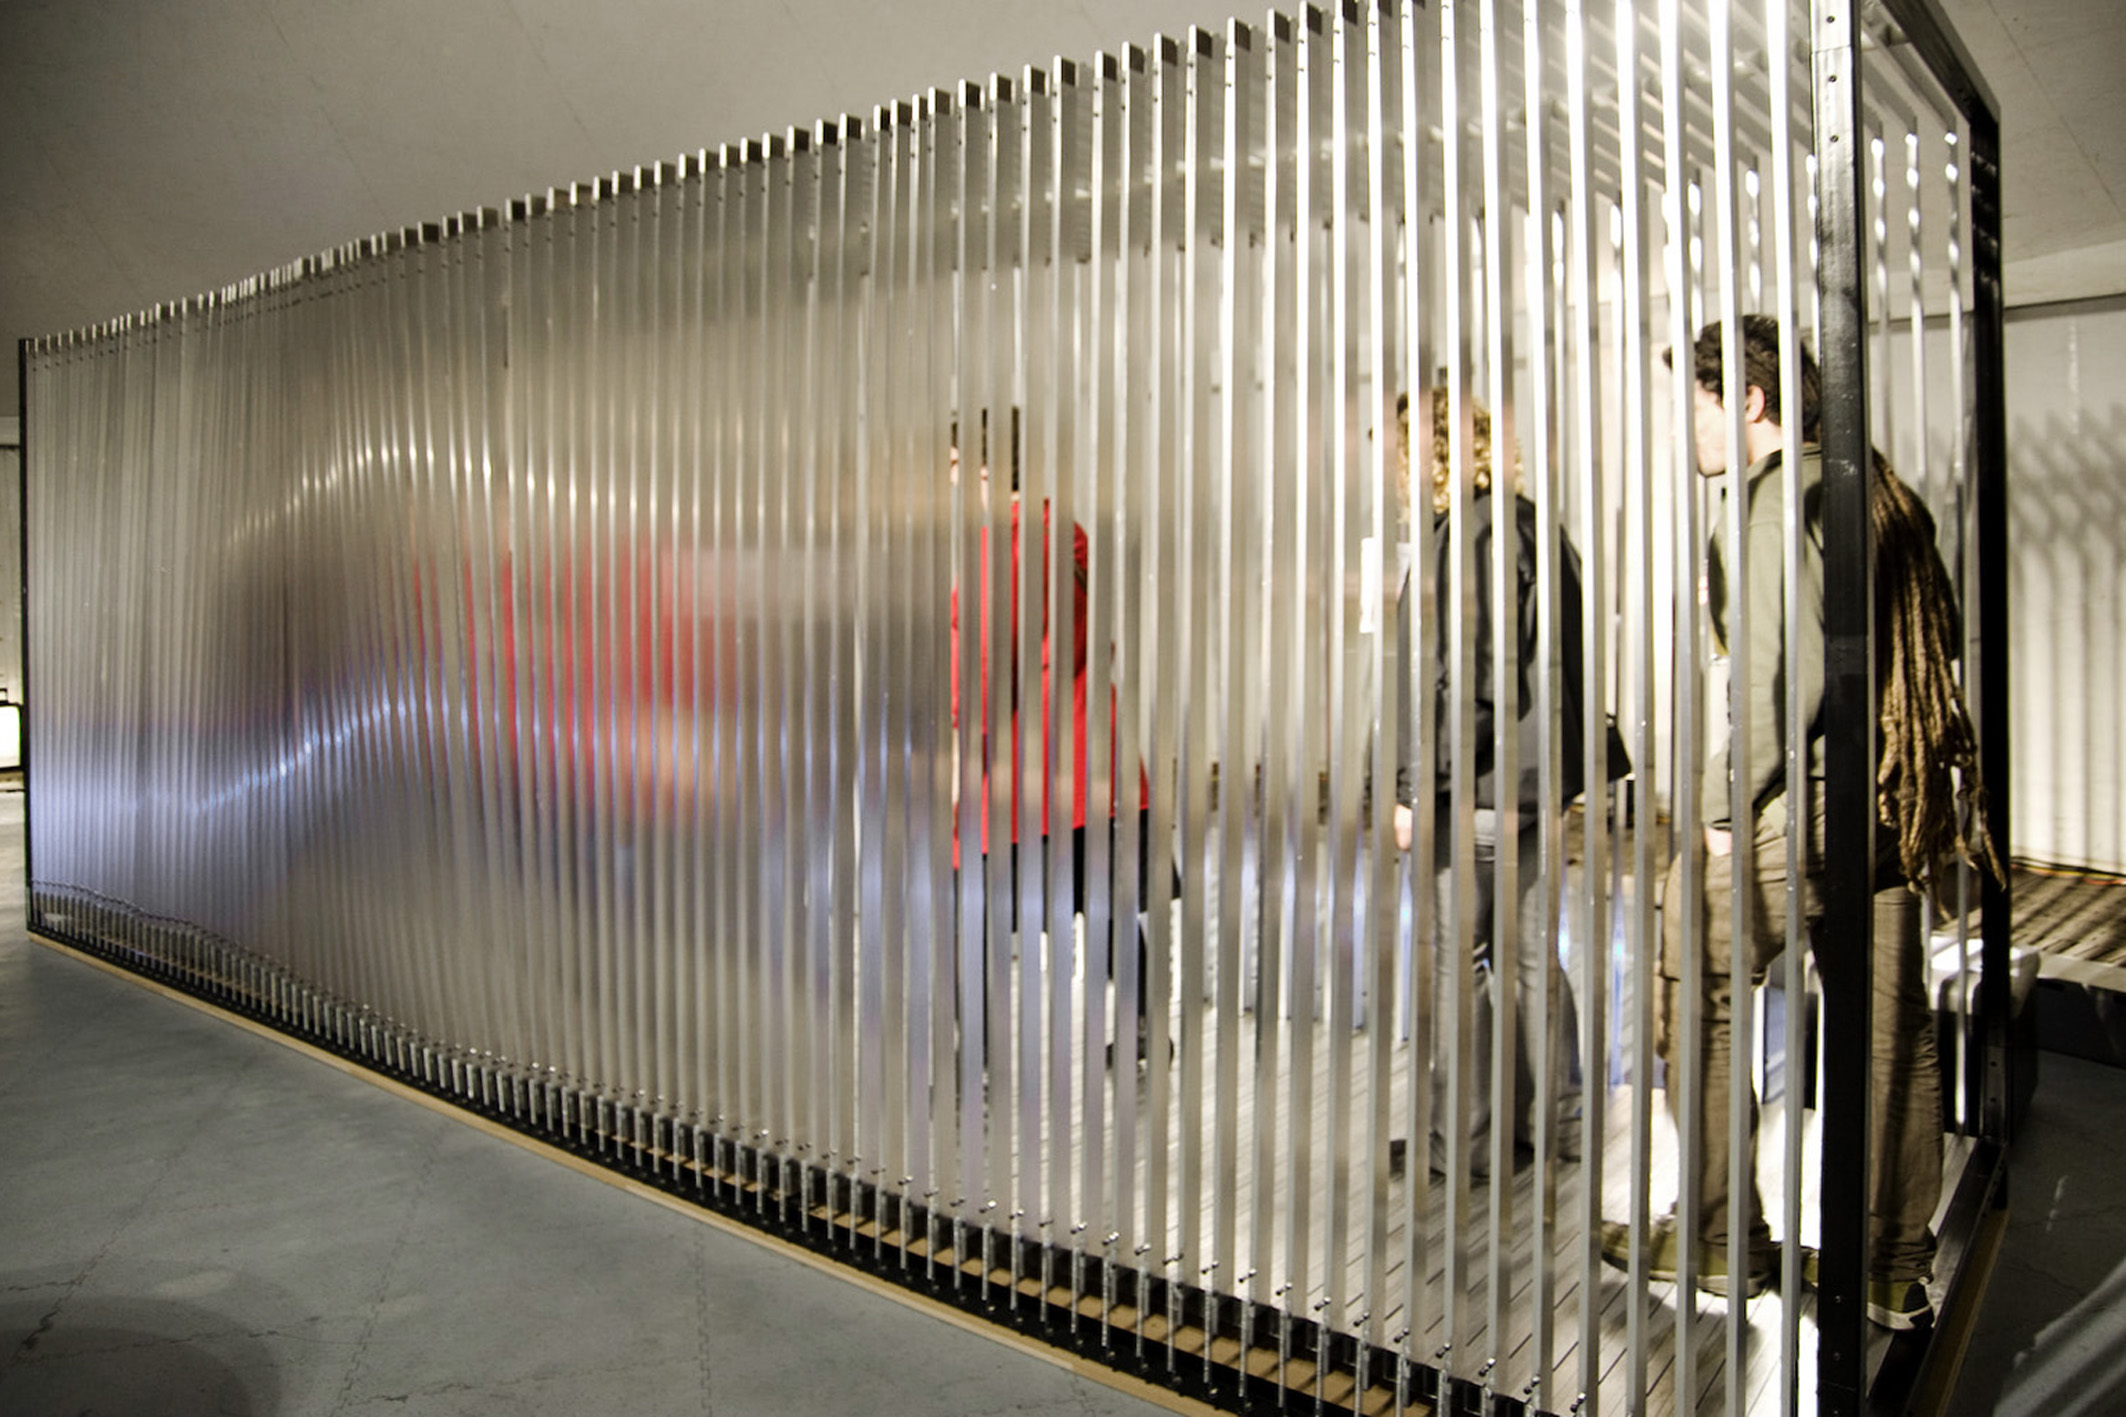    tunnel | túnel    @ zebrastraat 2012   + expo  